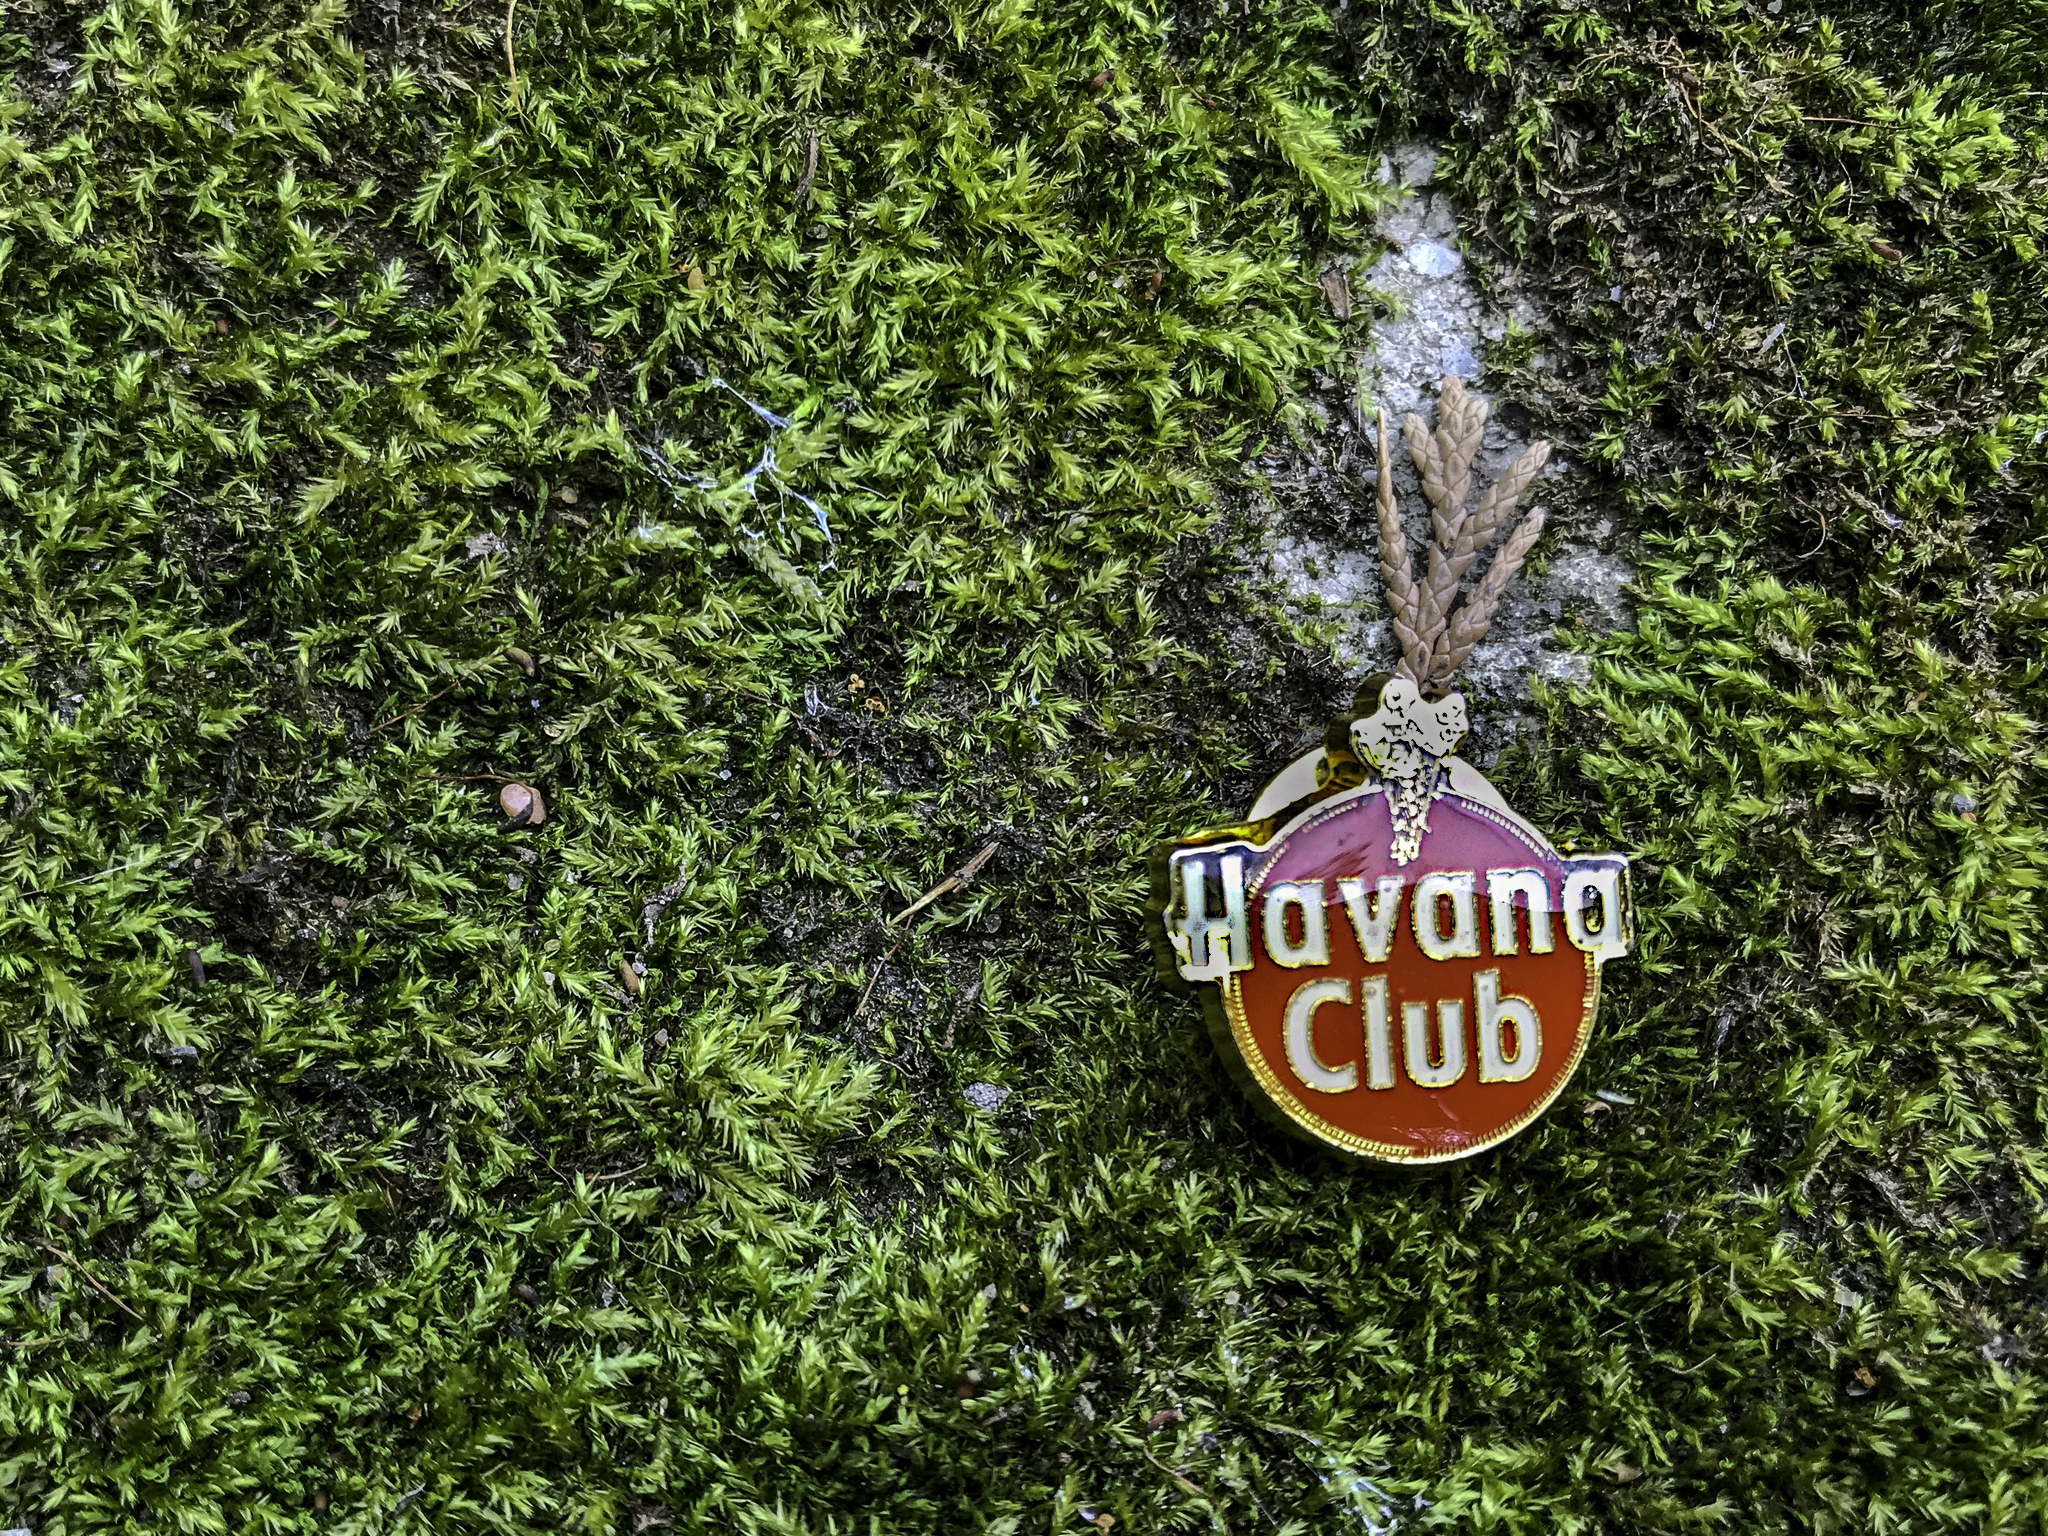 Havana Club Pin Badge